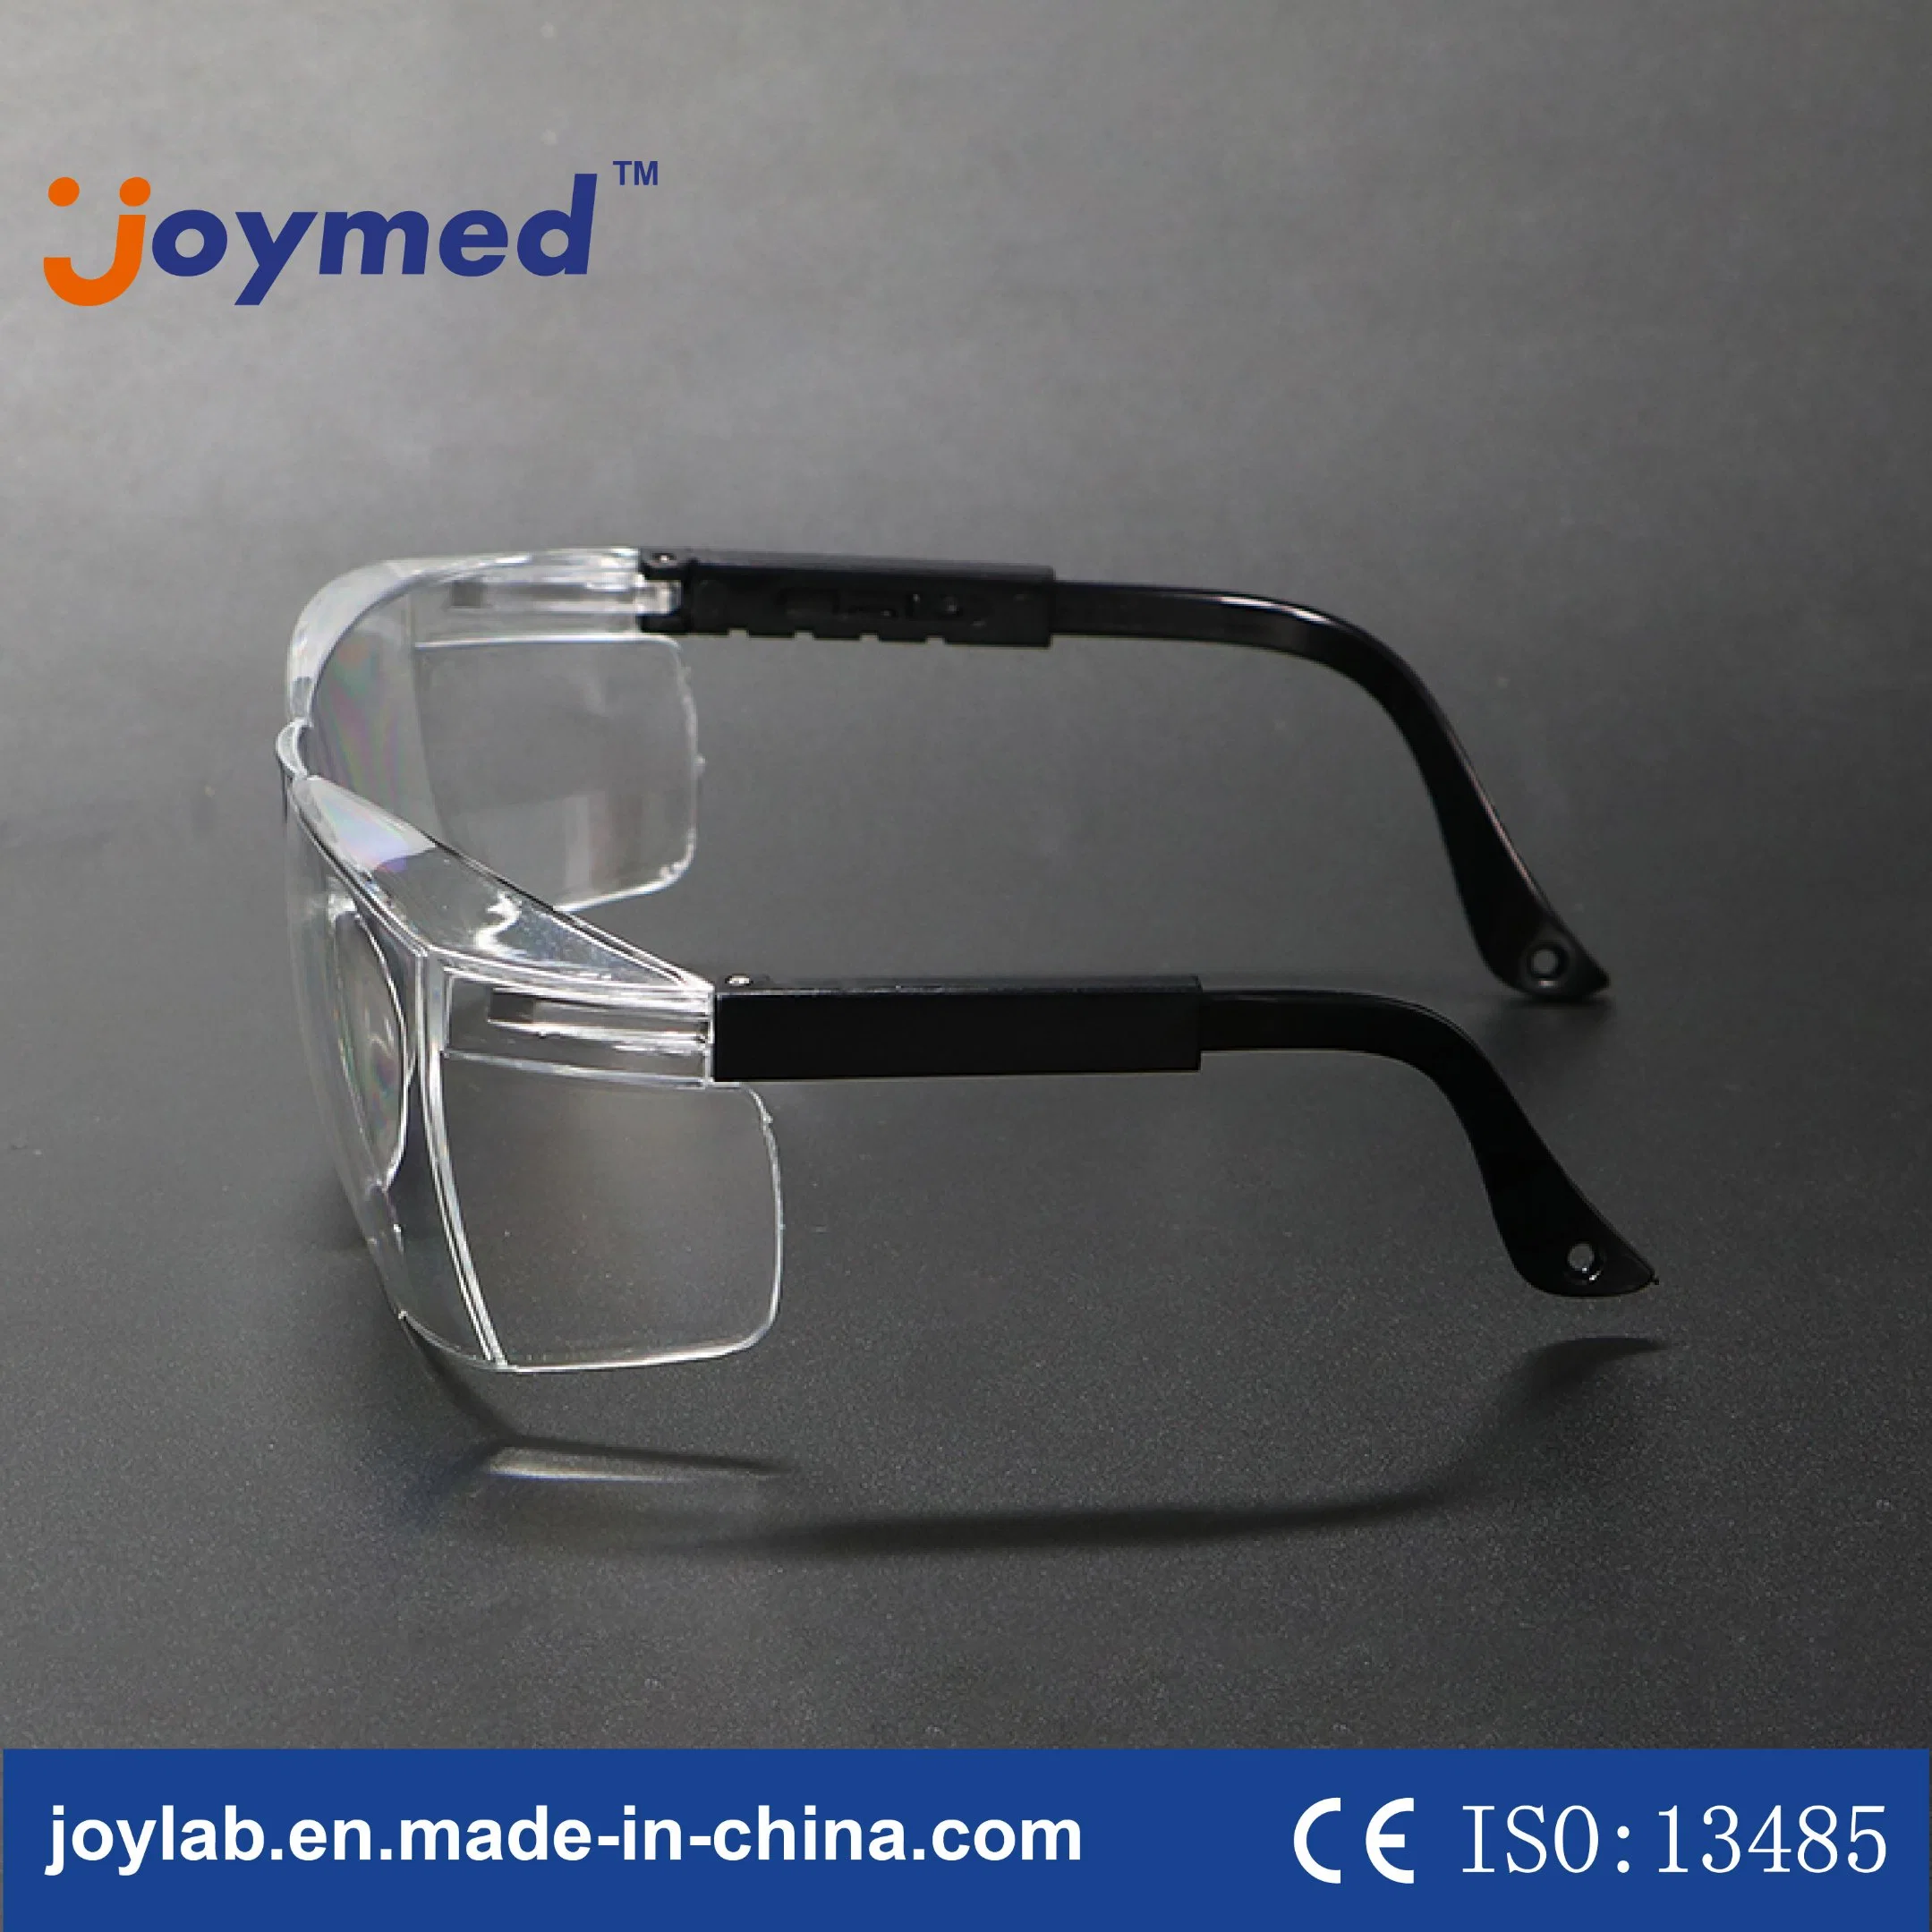 Medical Protective Eye Glasses Impact Resistant Anti Saliva Fog Safety Glasses Goggle